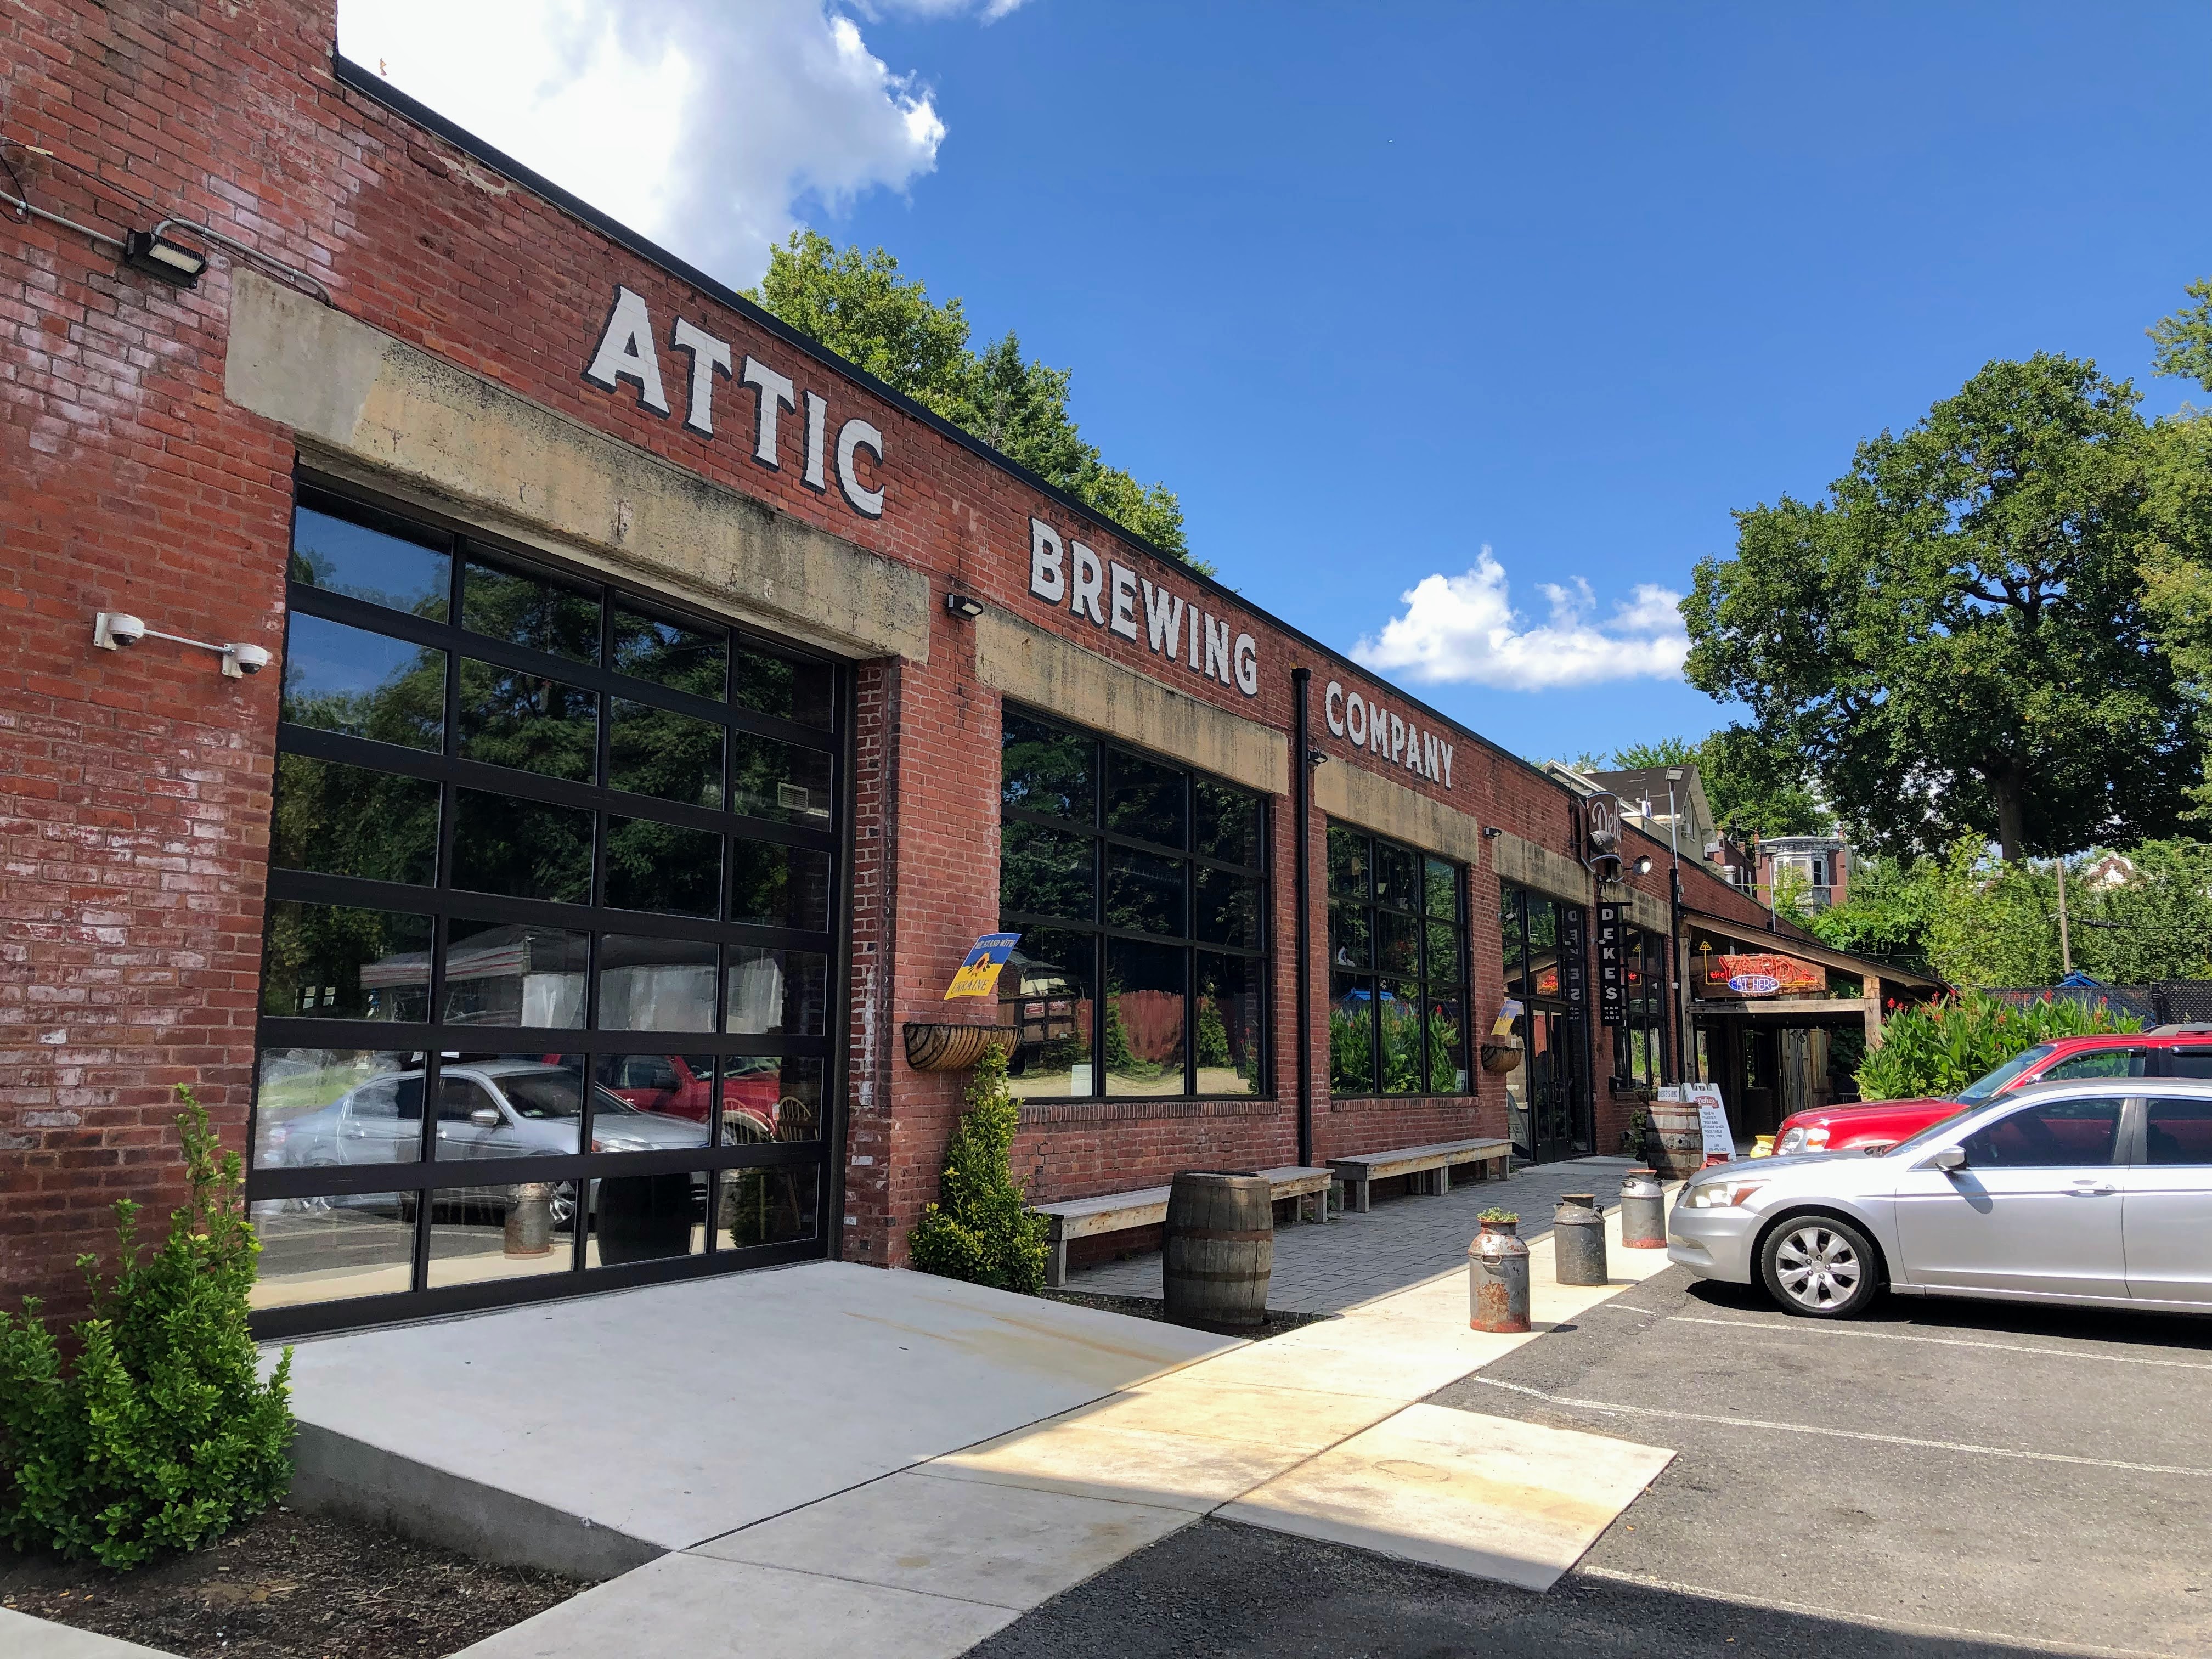 Exterior of Attic Brewing Company